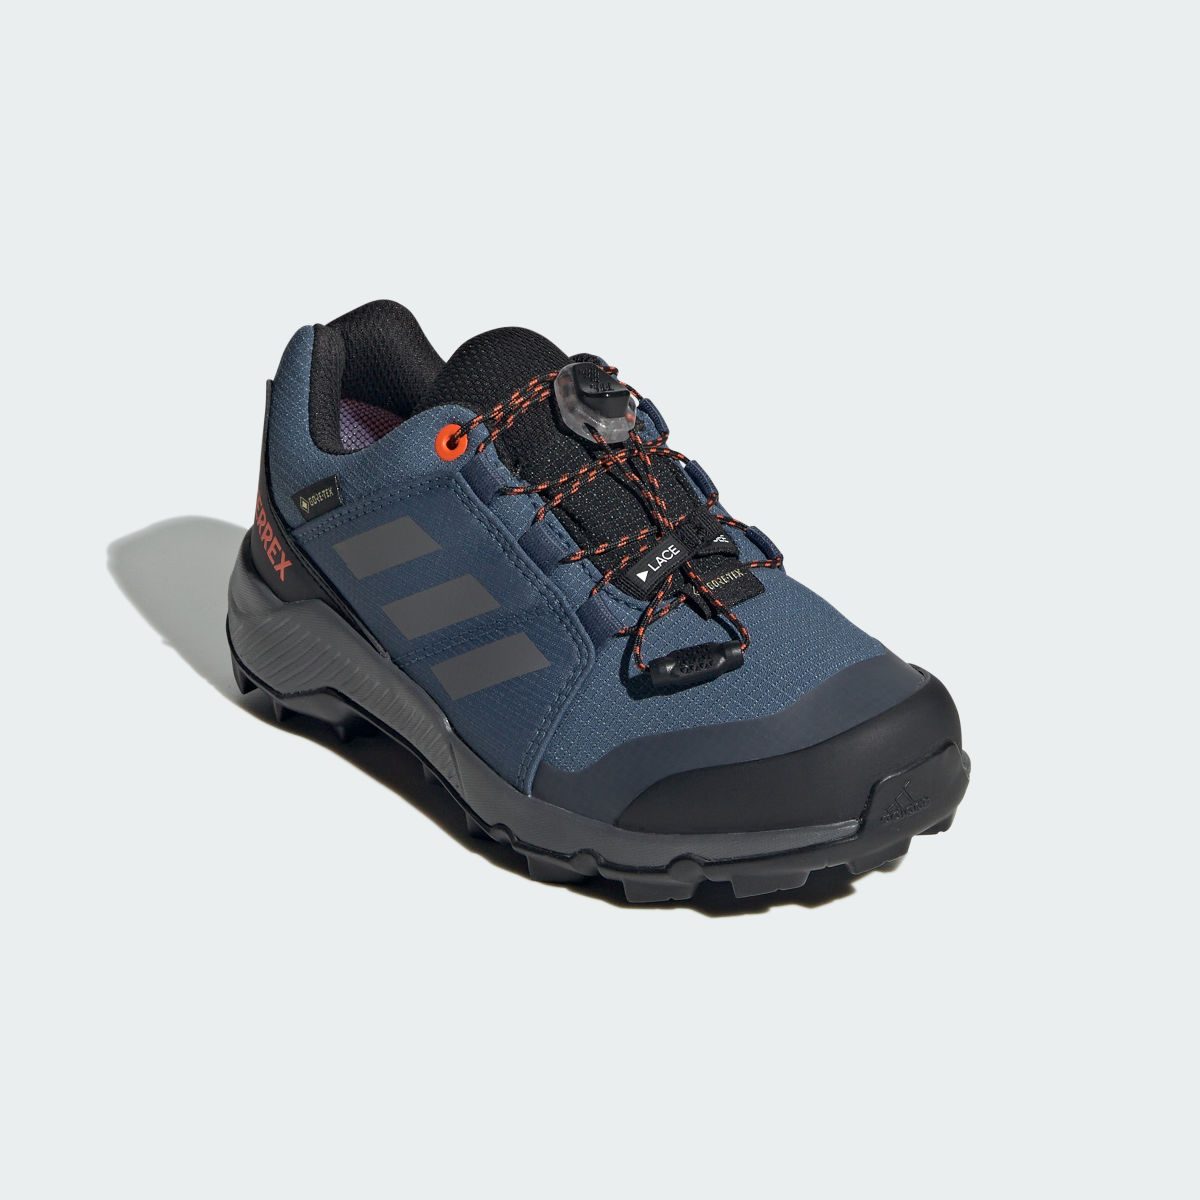 Adidas Terrex GORE-TEX Hiking Shoes. 6